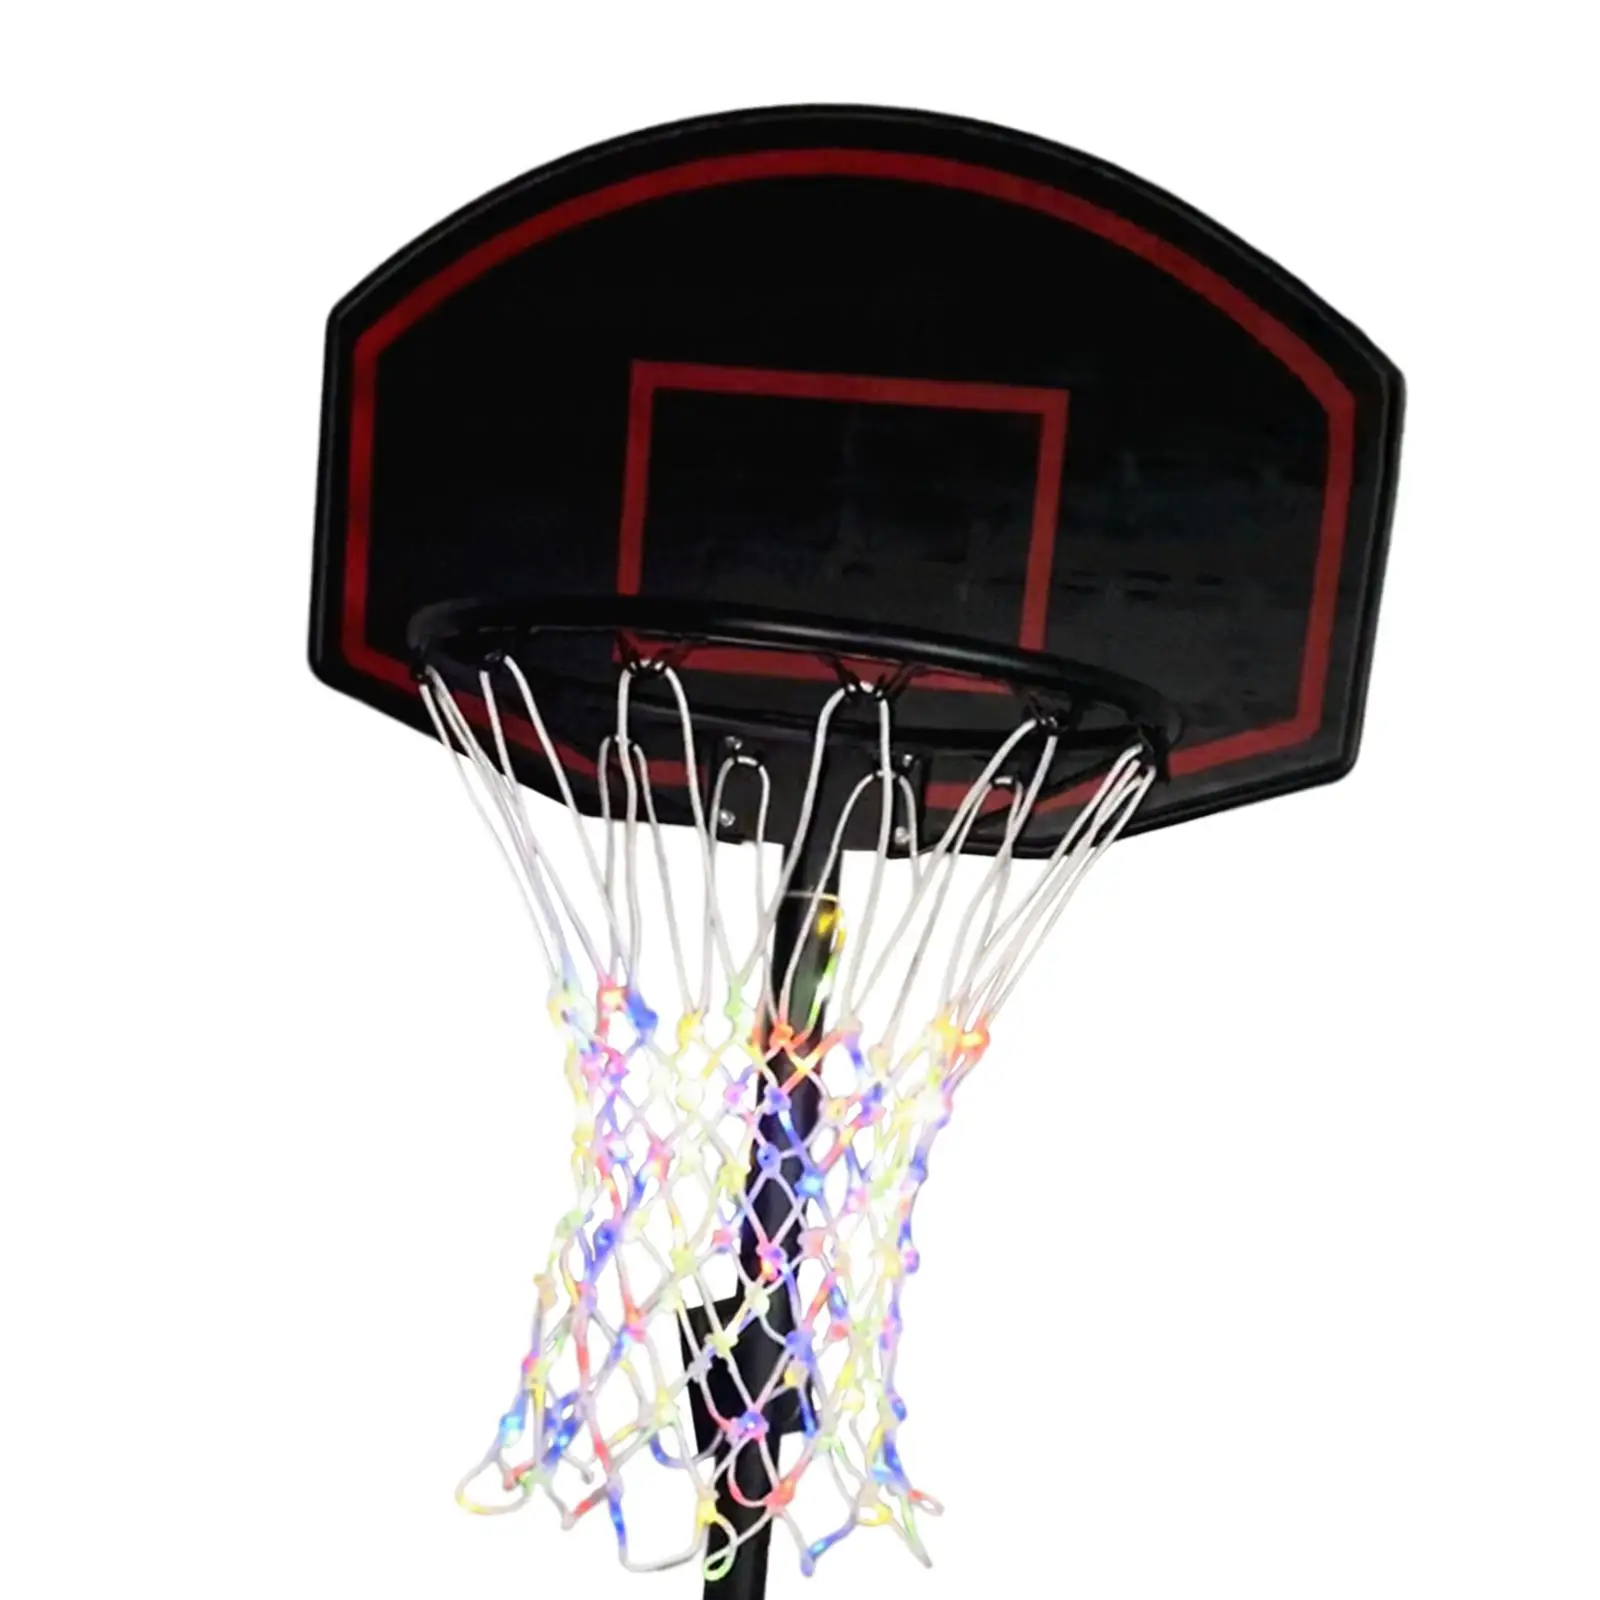 LED Basketball hoop Outdoor Luminous Nightlight Basketball Net for Outdoor Game Basketball Training Sports Backyard Adults